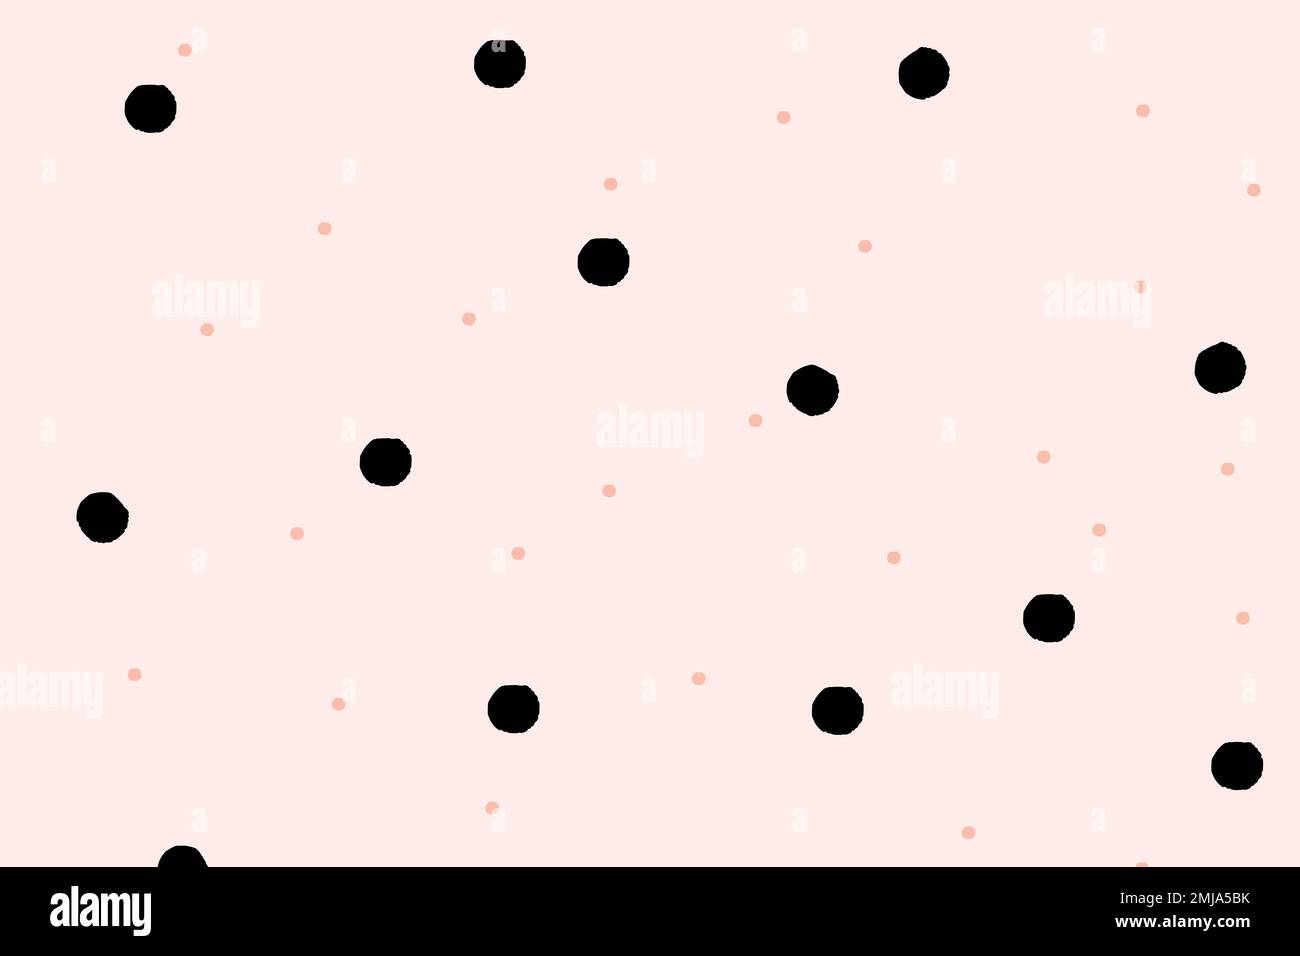 Polka dot background desktop wallpaper, cute vector Stock Vector Image ...